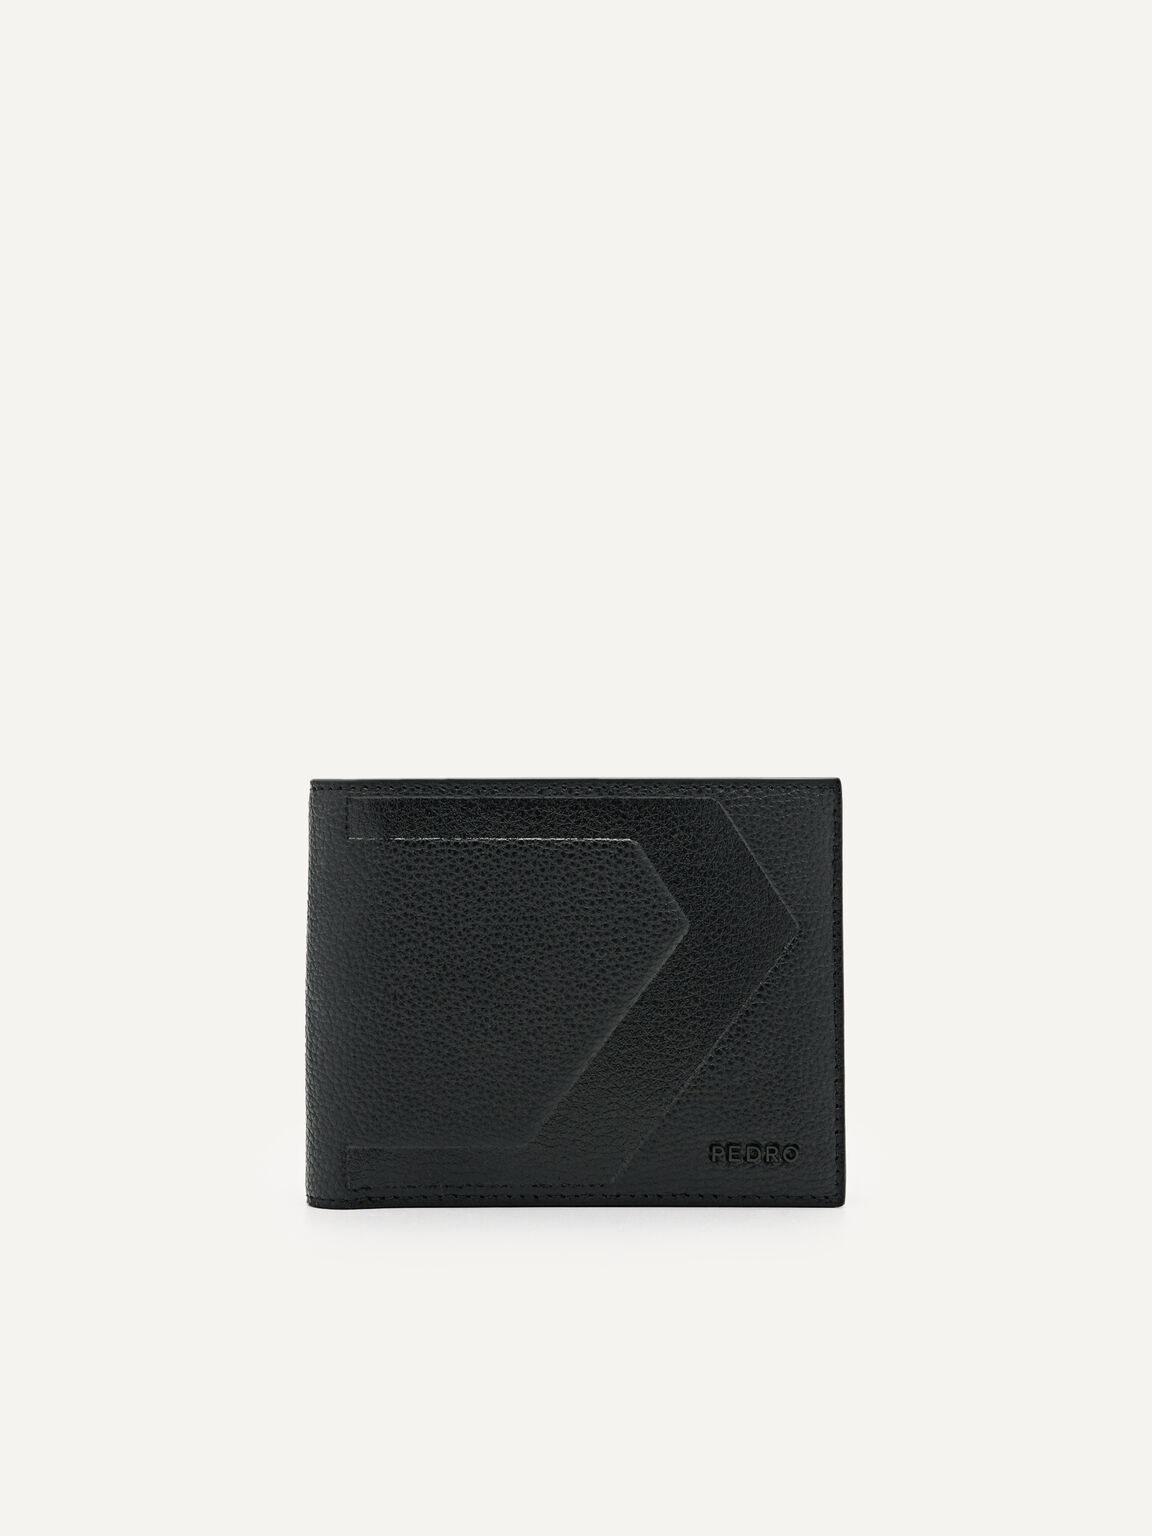 Ví dáng ngắn Leather Bi-Fold, Đen, hi-res